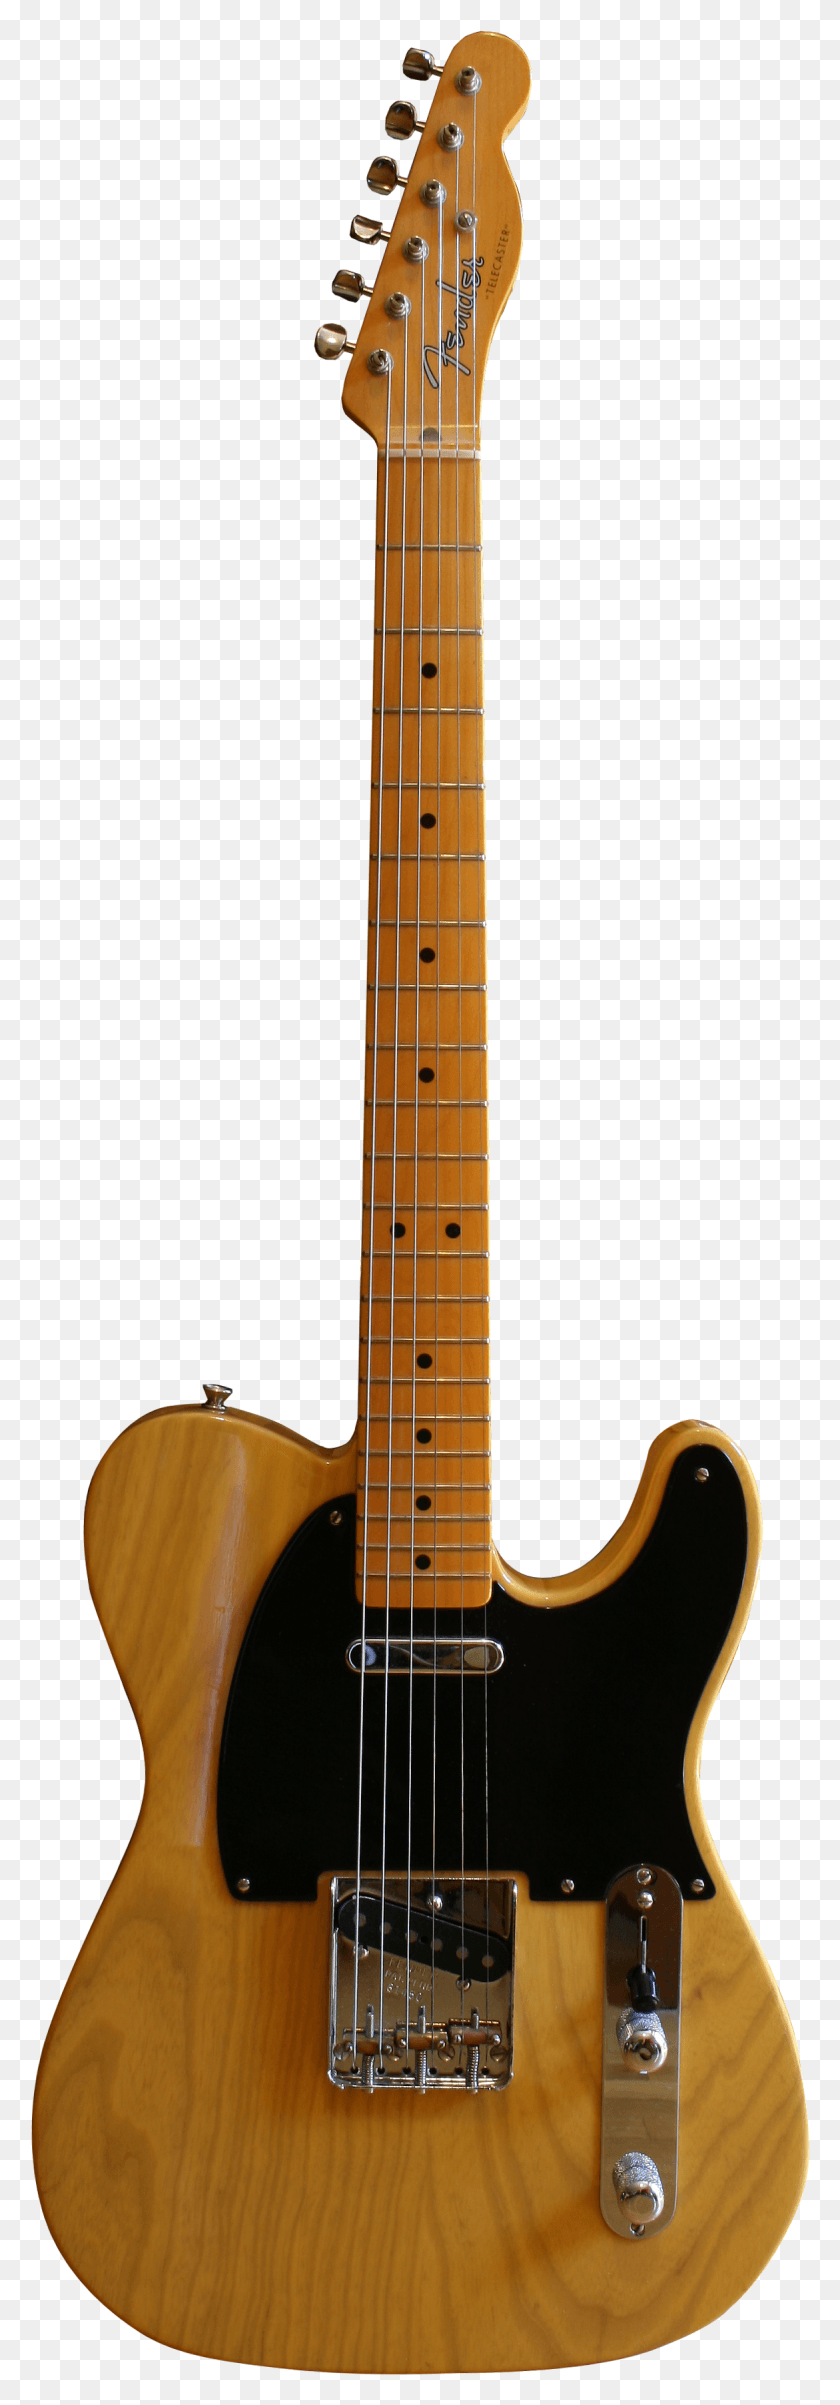 1171x3521 Descargar Png Fender Telecaster American Vintage 1952 Transparente Fender Telecaster, Guitarra, Actividades De Ocio, Instrumento Musical Hd Png